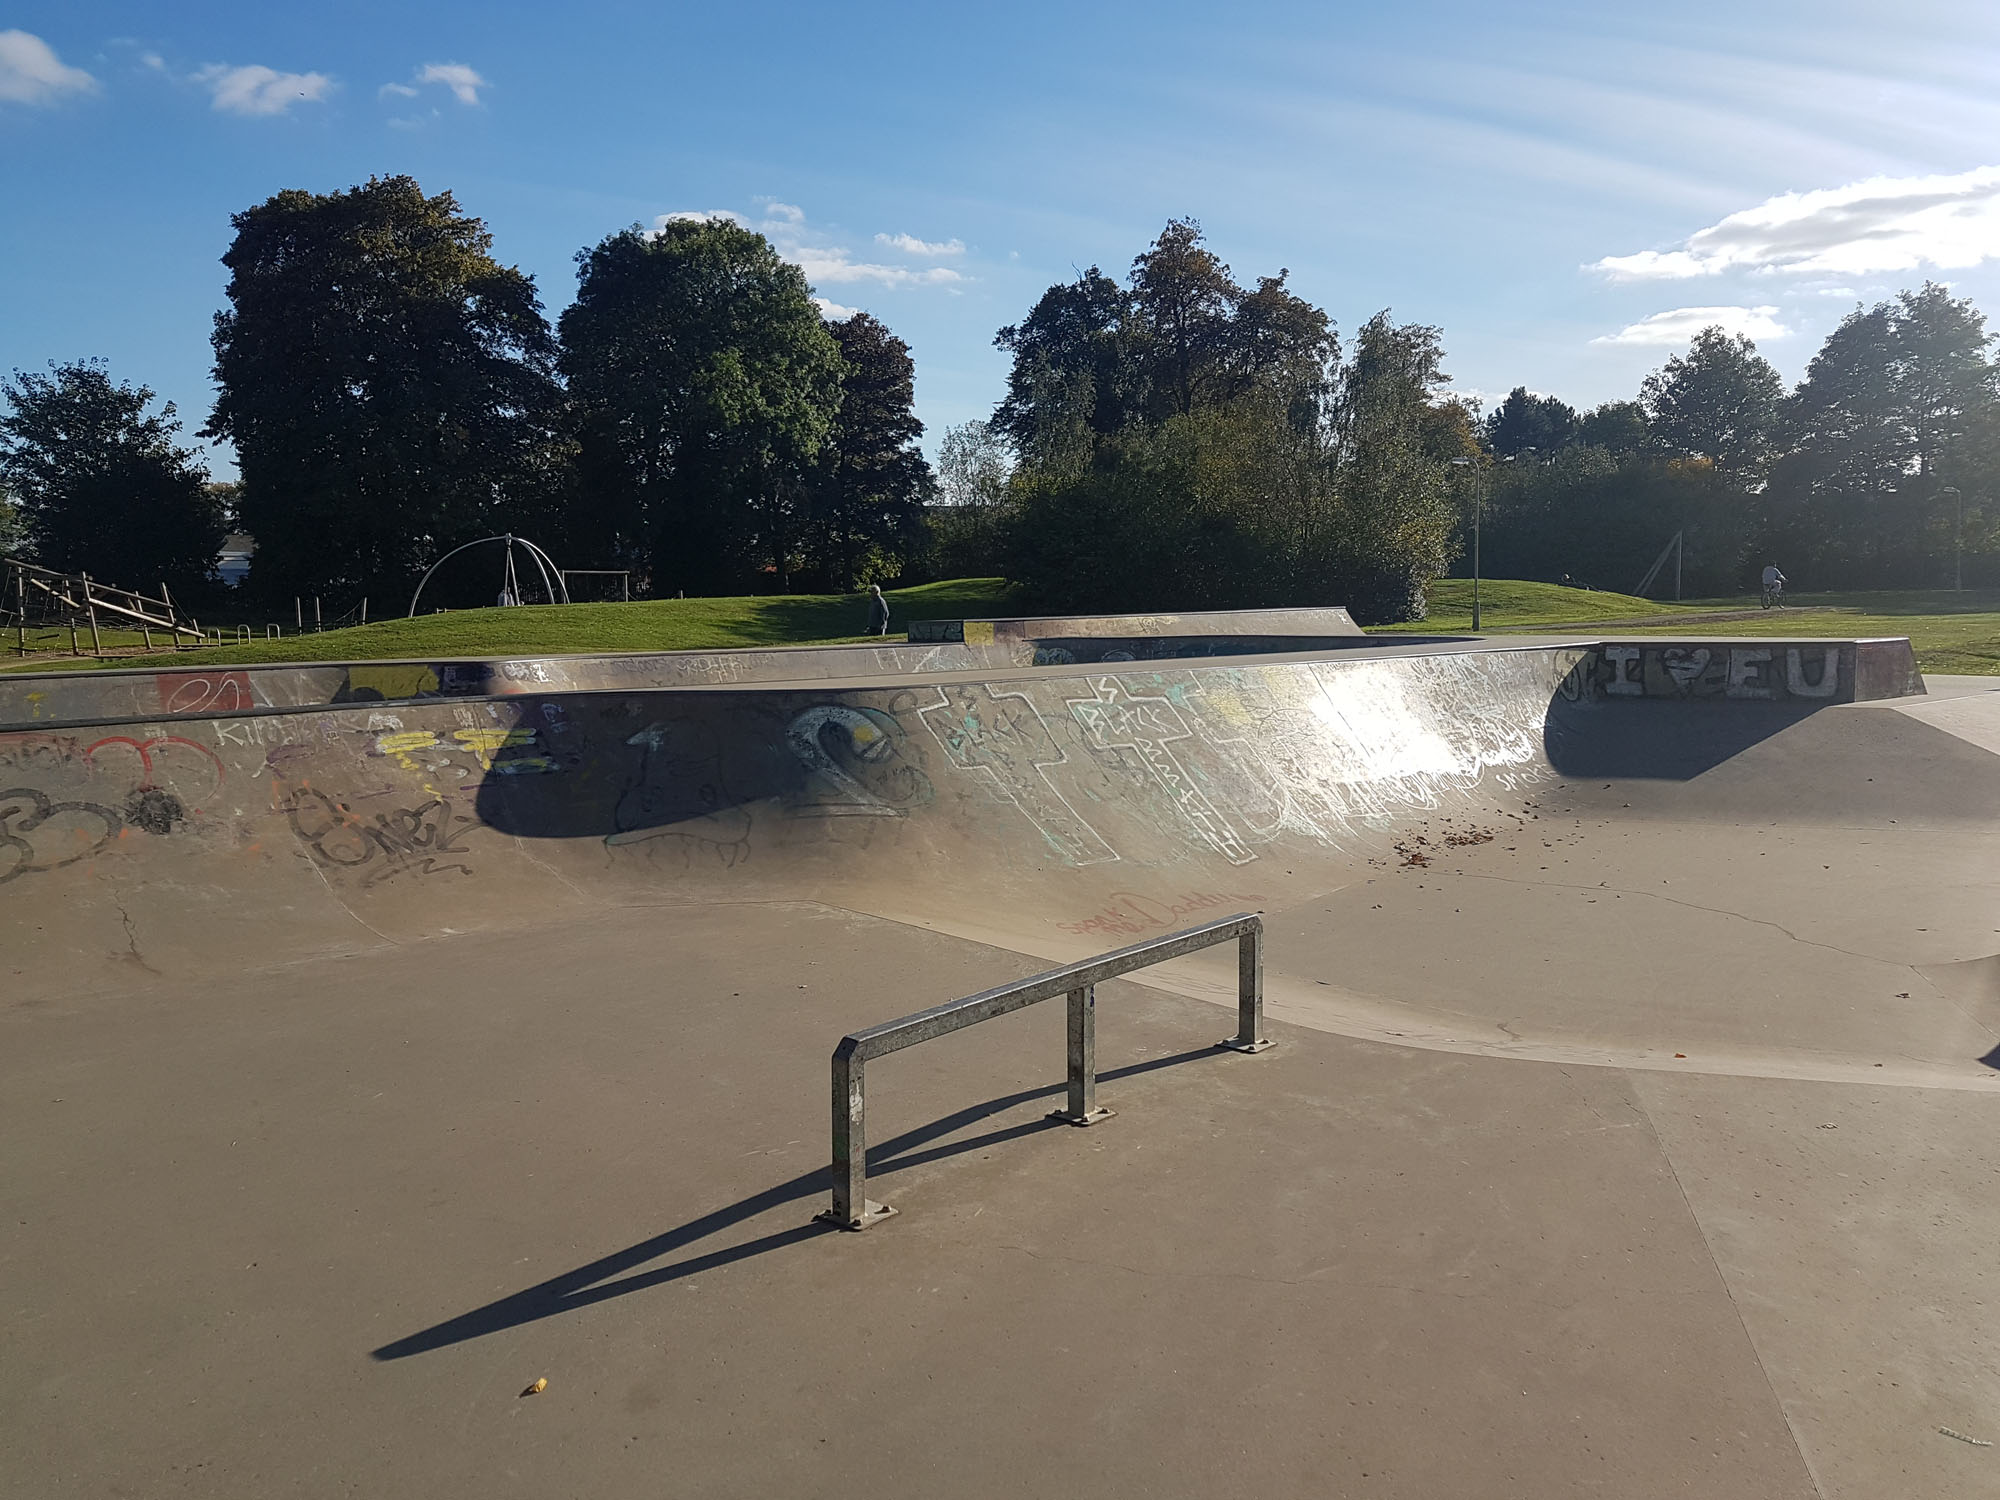 loughborough skatepark review tips skateboarding in leicestershire u k